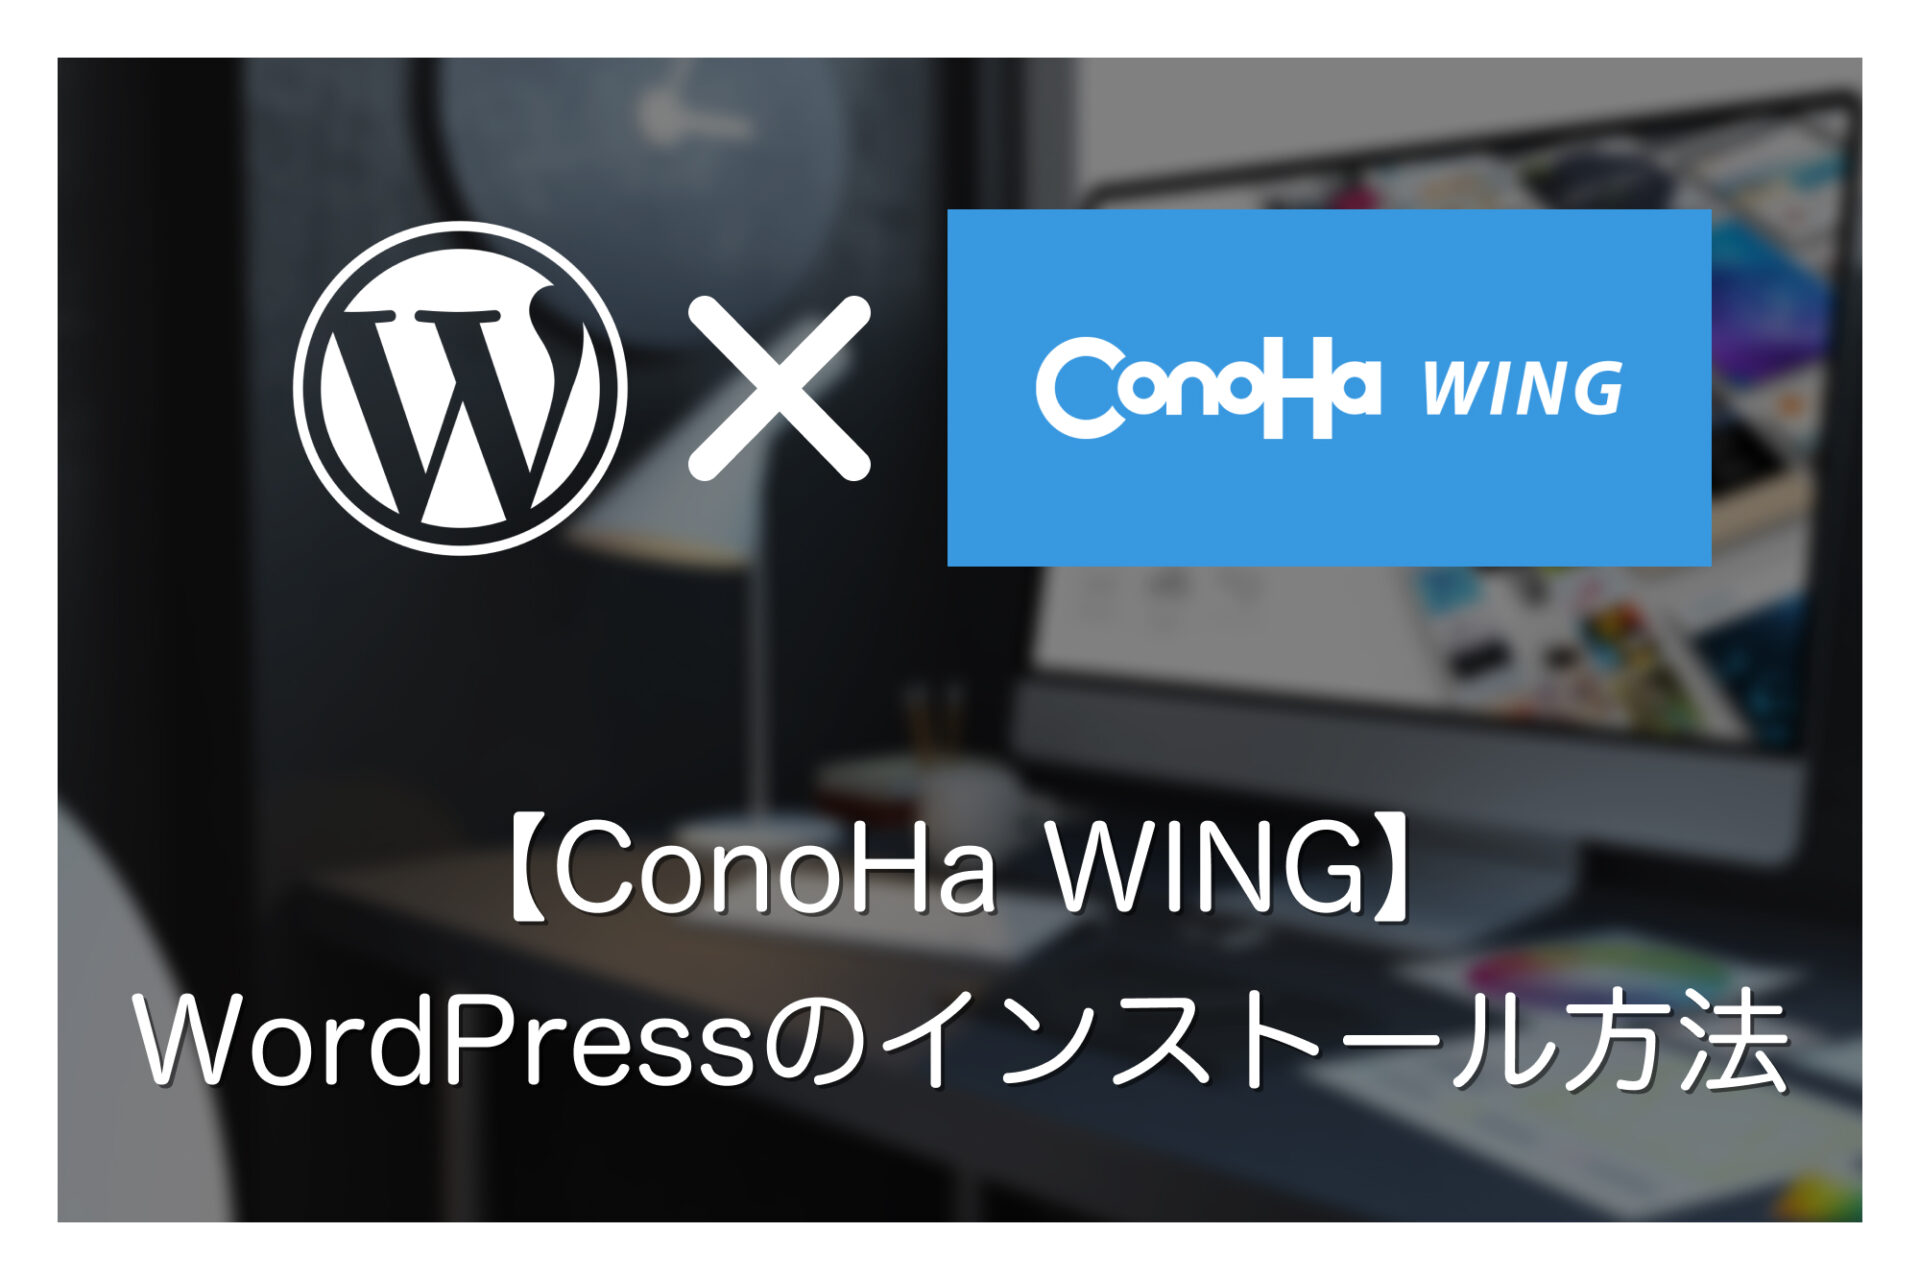 ConoHa WINGでWordPressをインストールする方法・始め方